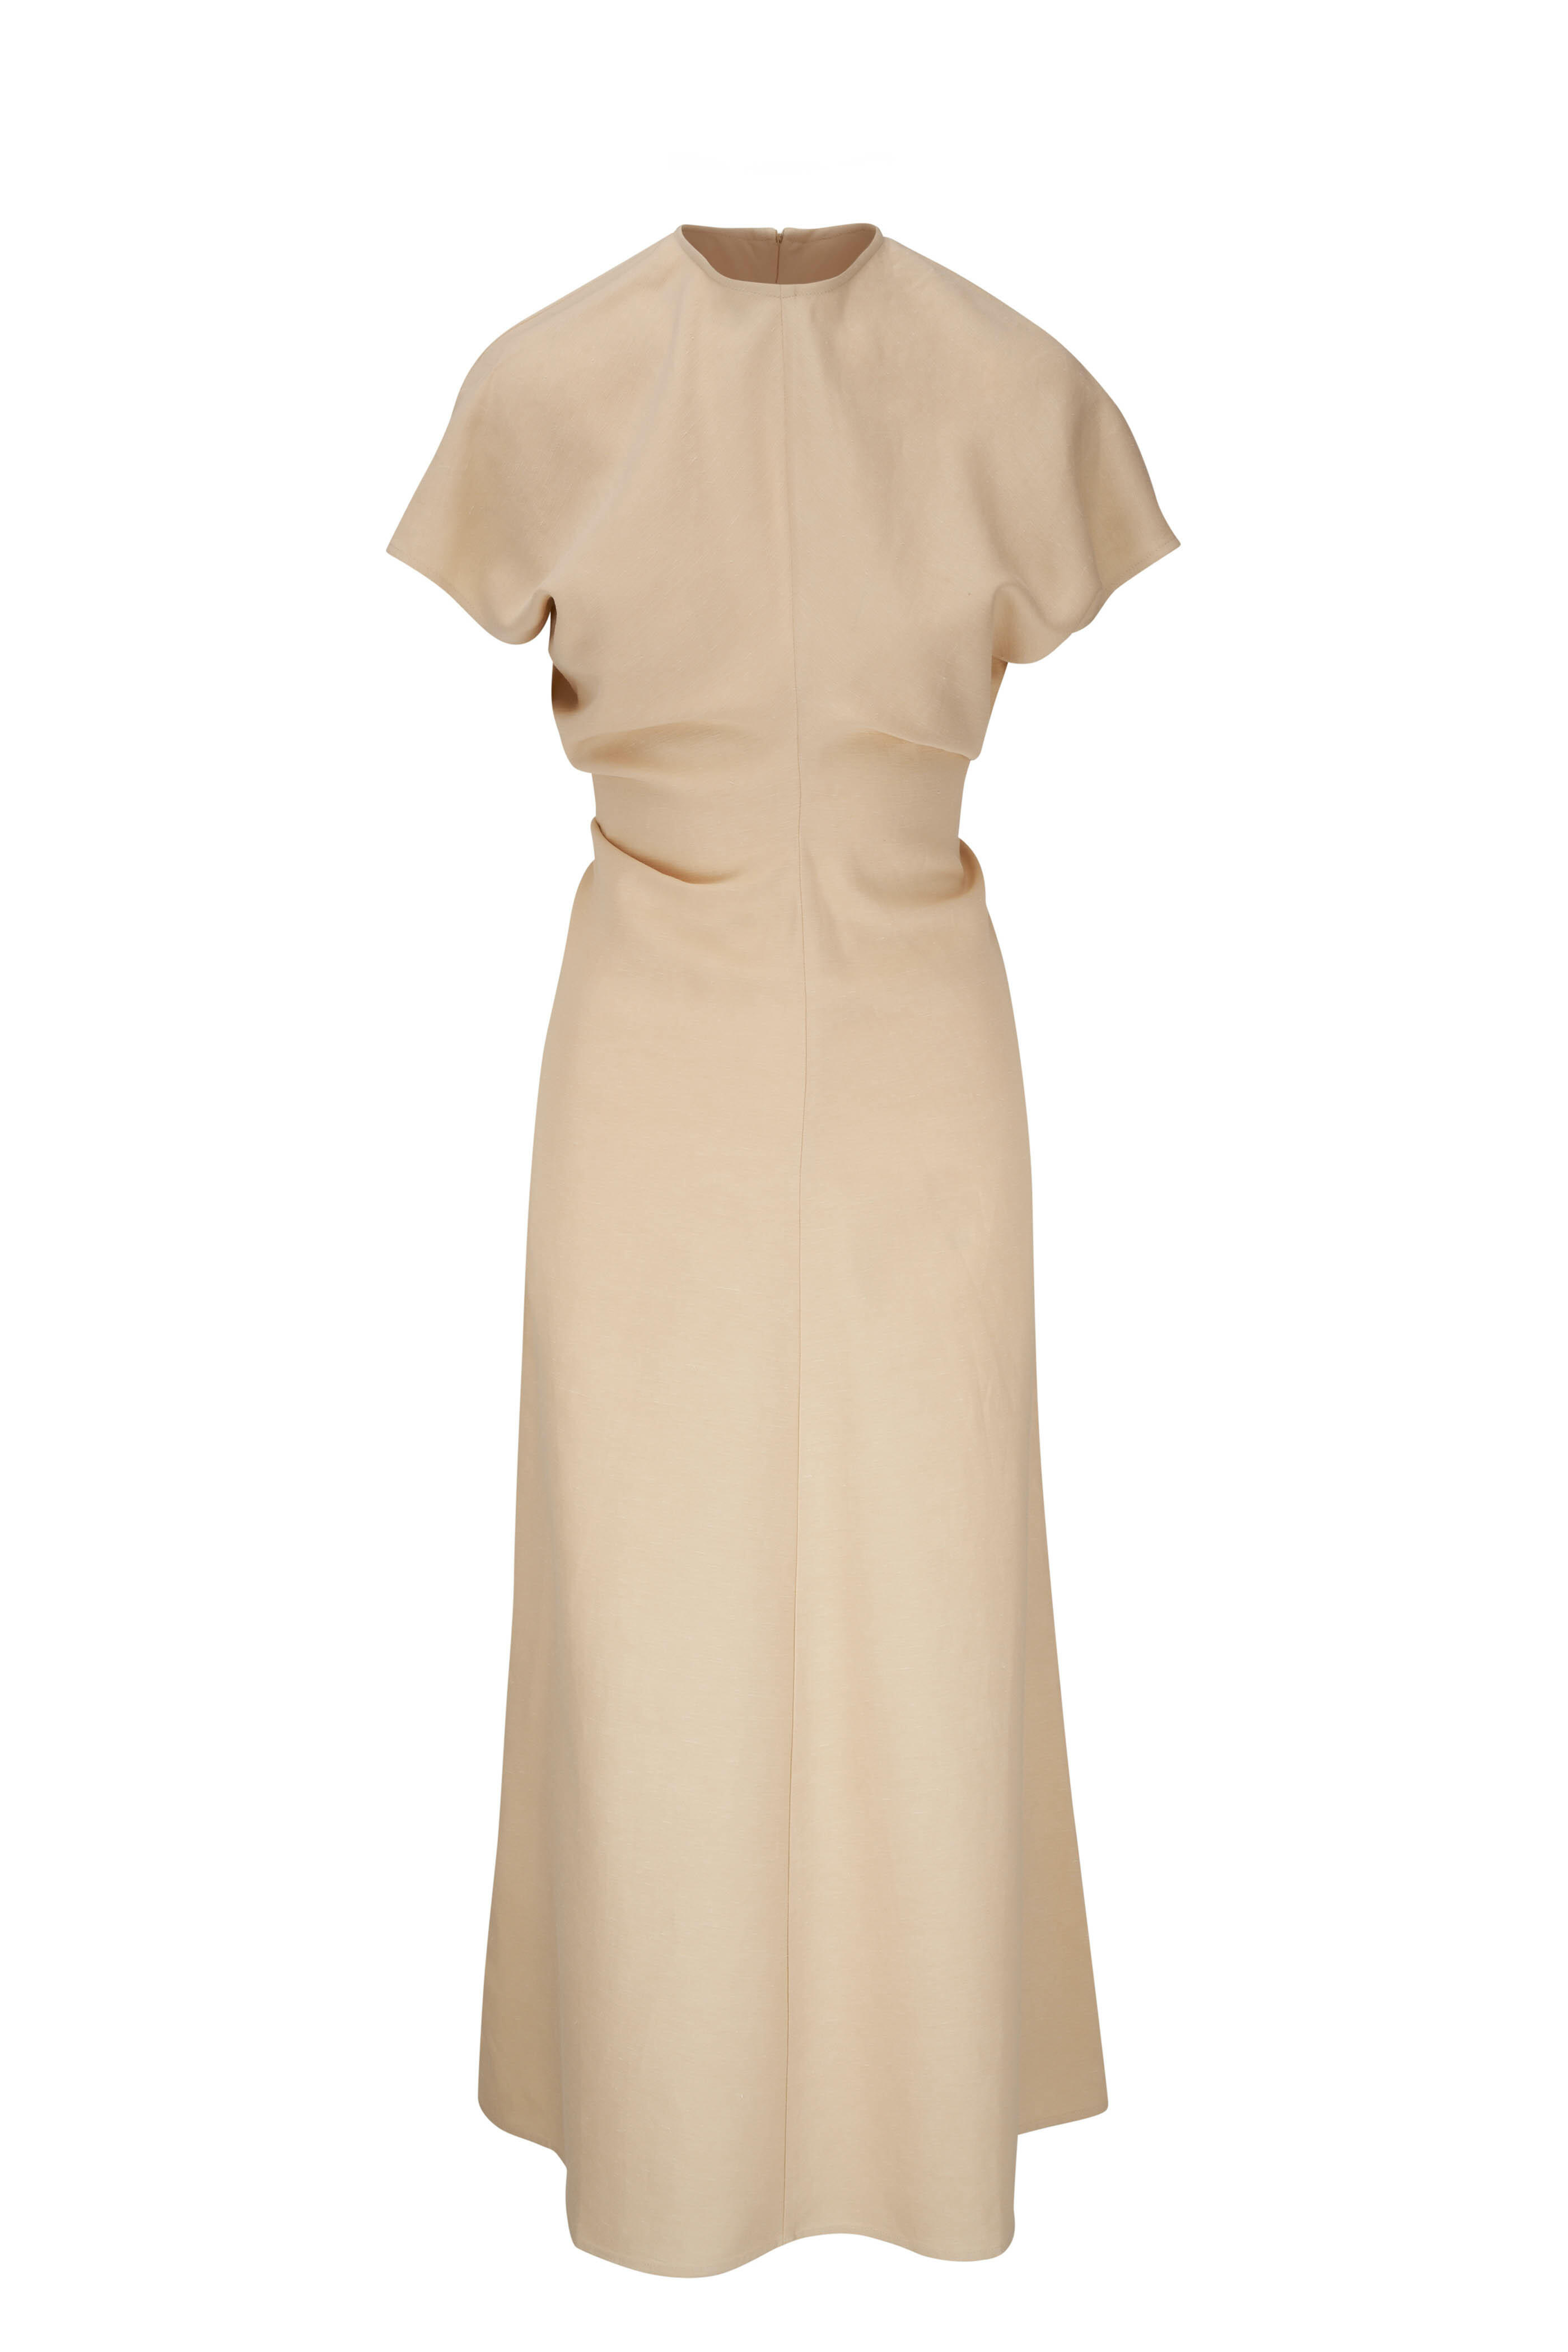 Louis Vuitton Python-effect Monogram Jacquard Polo Dress, White, Xs